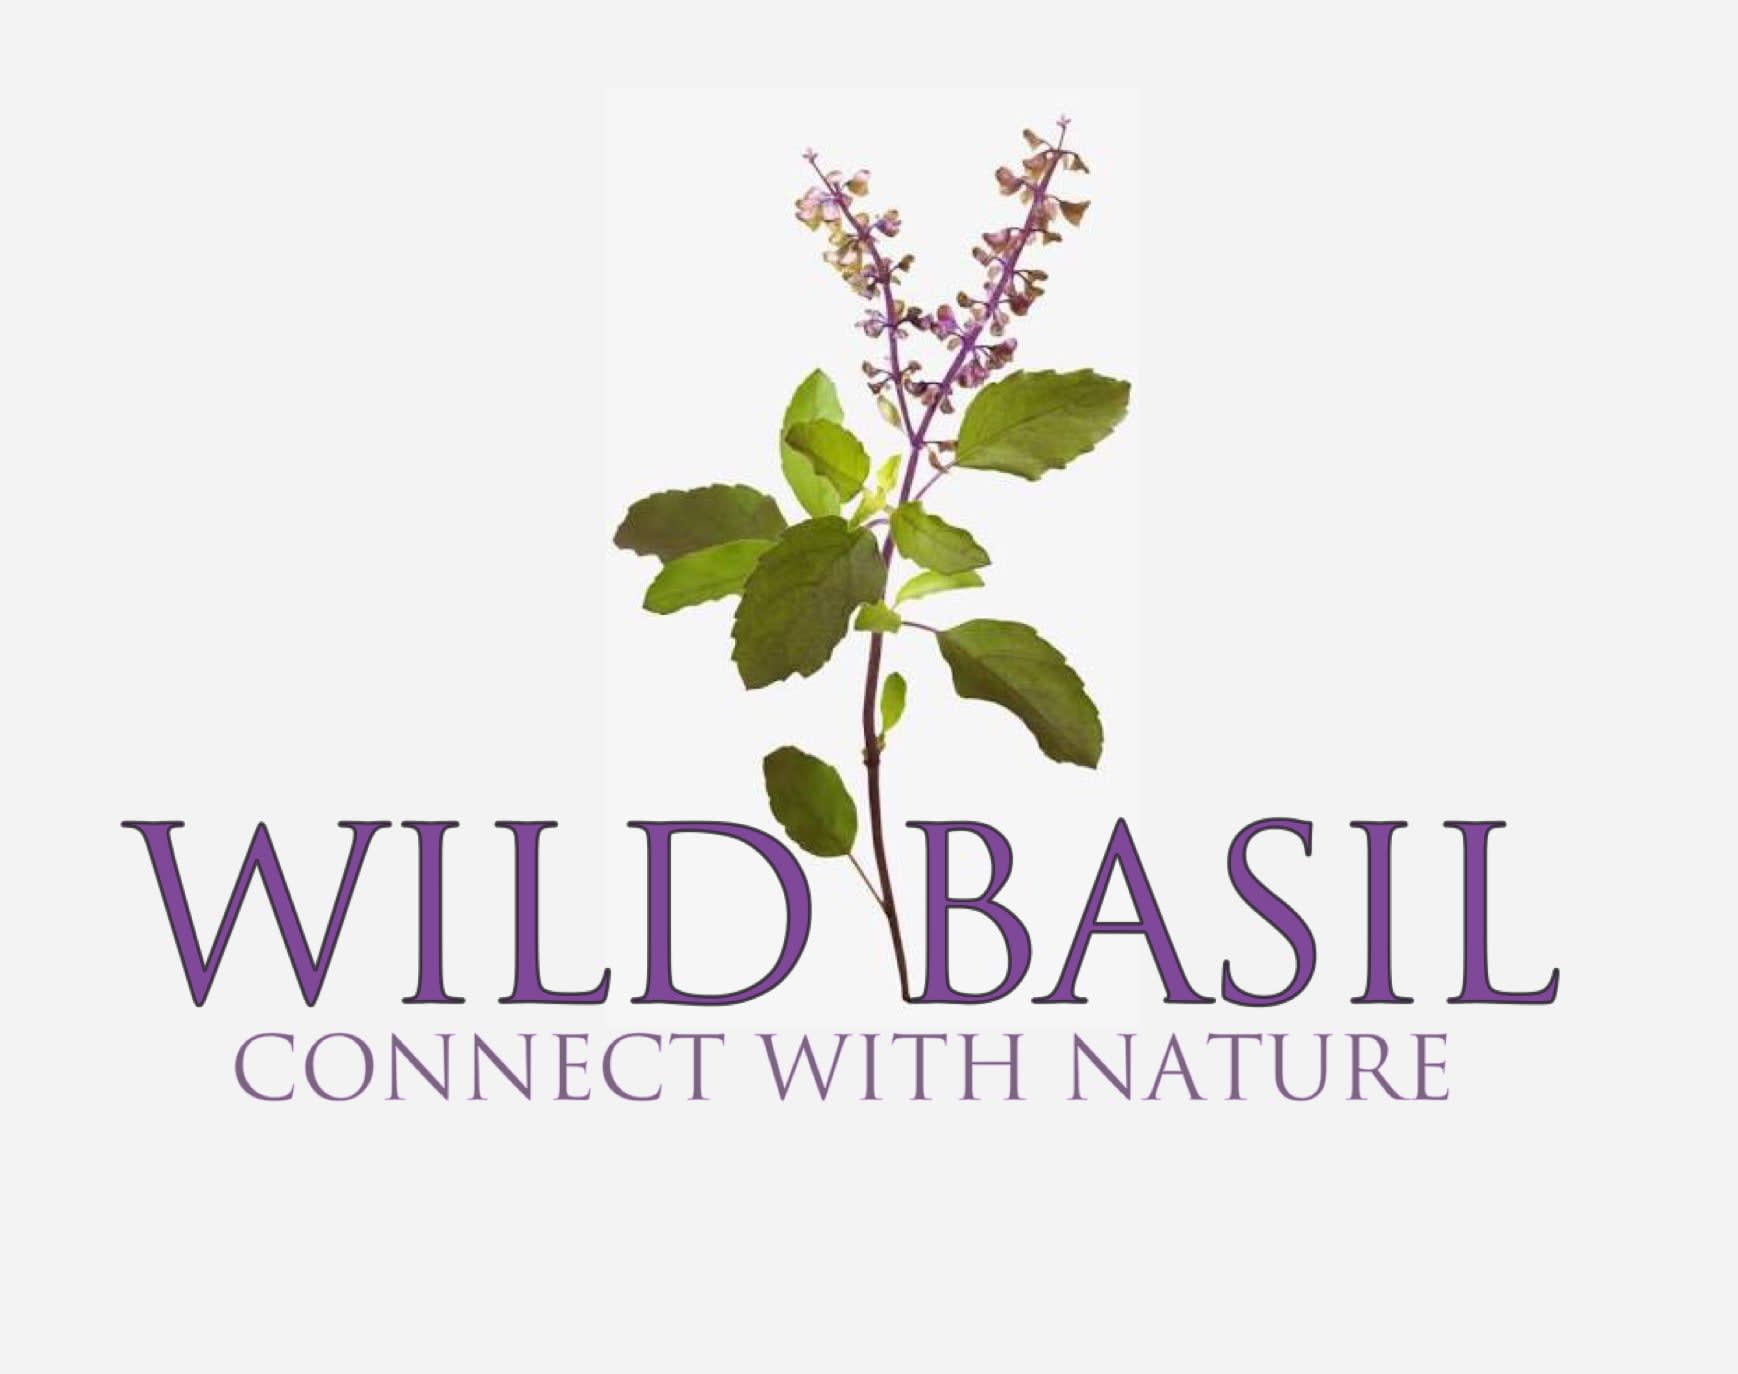 The Wild Basil